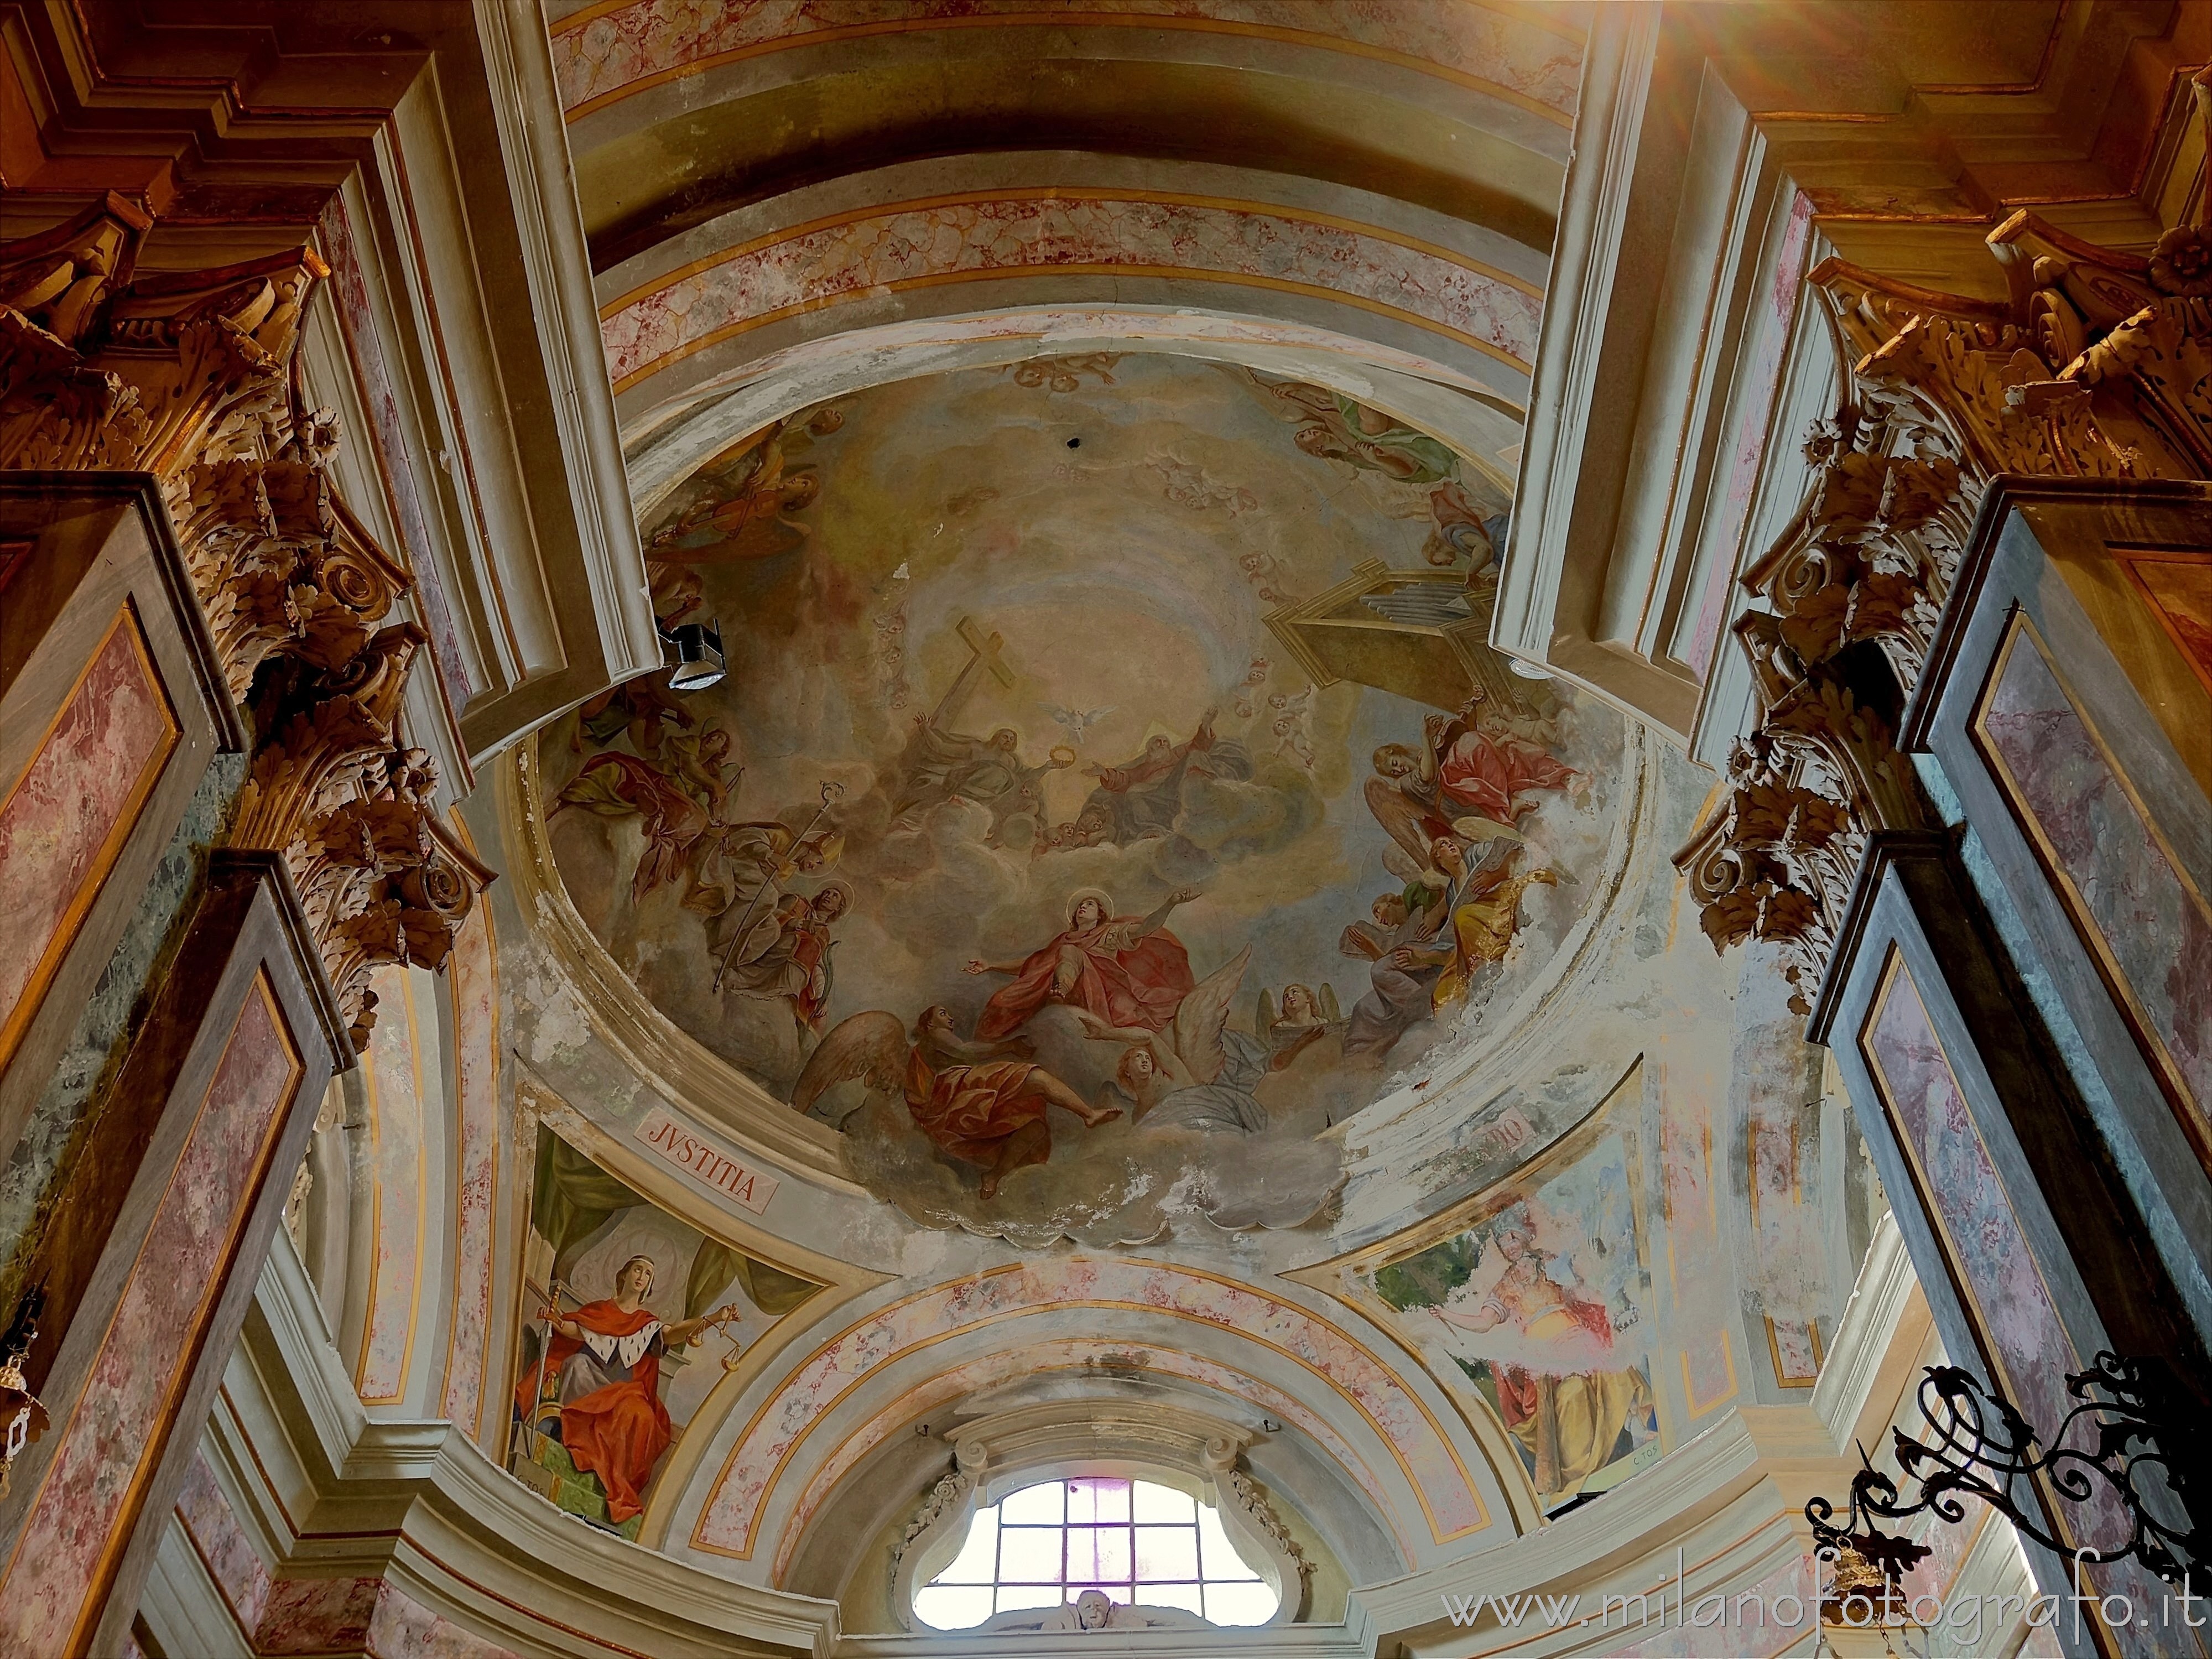 Ghislarengo (Novara, Italy): Dome of the San Felice chapel in the Church of Beata Vergine Assunta - Ghislarengo (Novara, Italy)